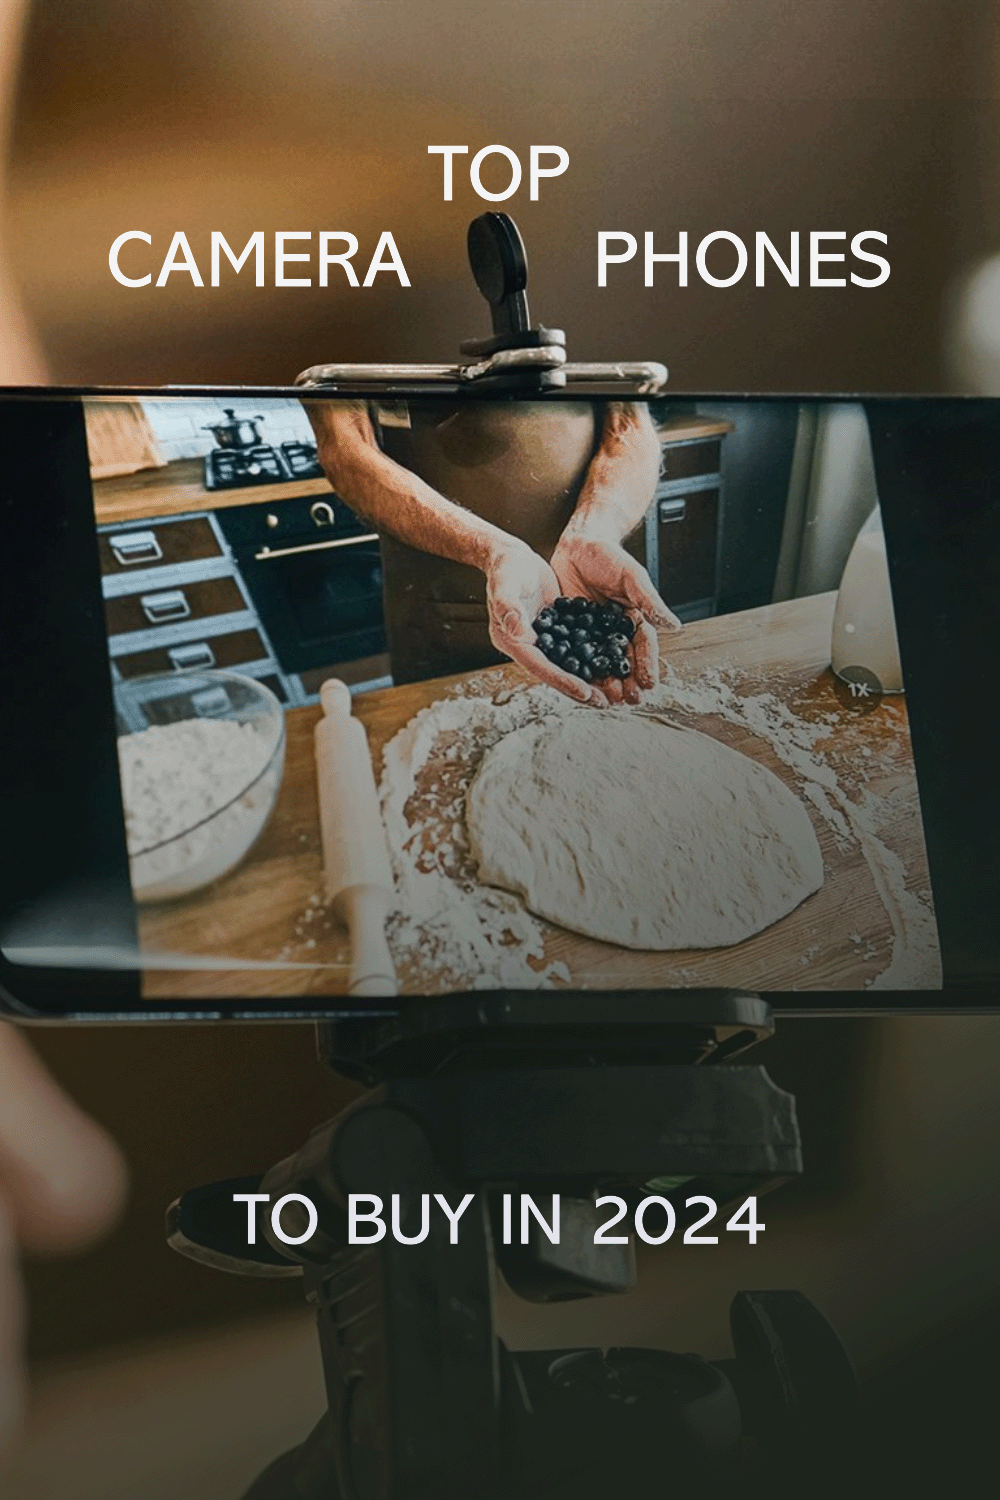 The best camera phones to buy in 2024